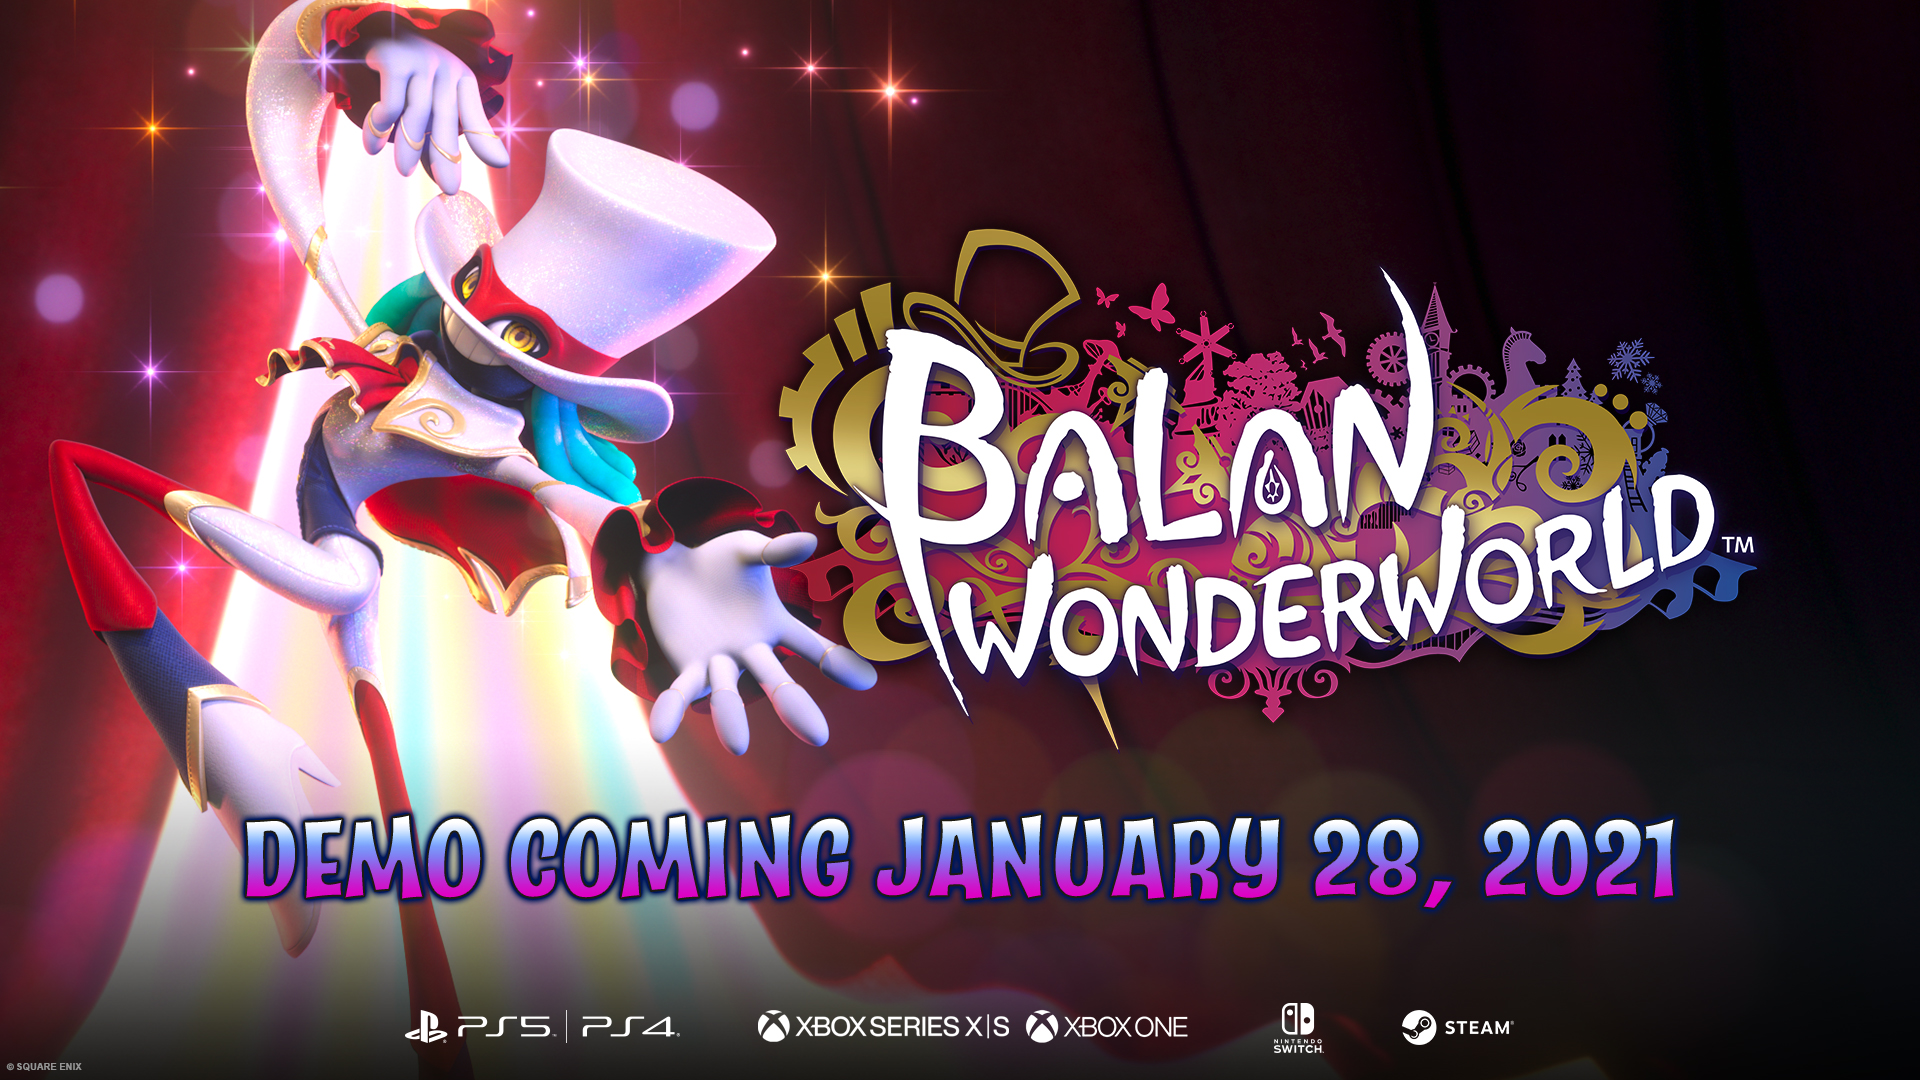 Balan Wonderworld prozrazuje termín dema Balan Wonderworld Demo 01 19 21